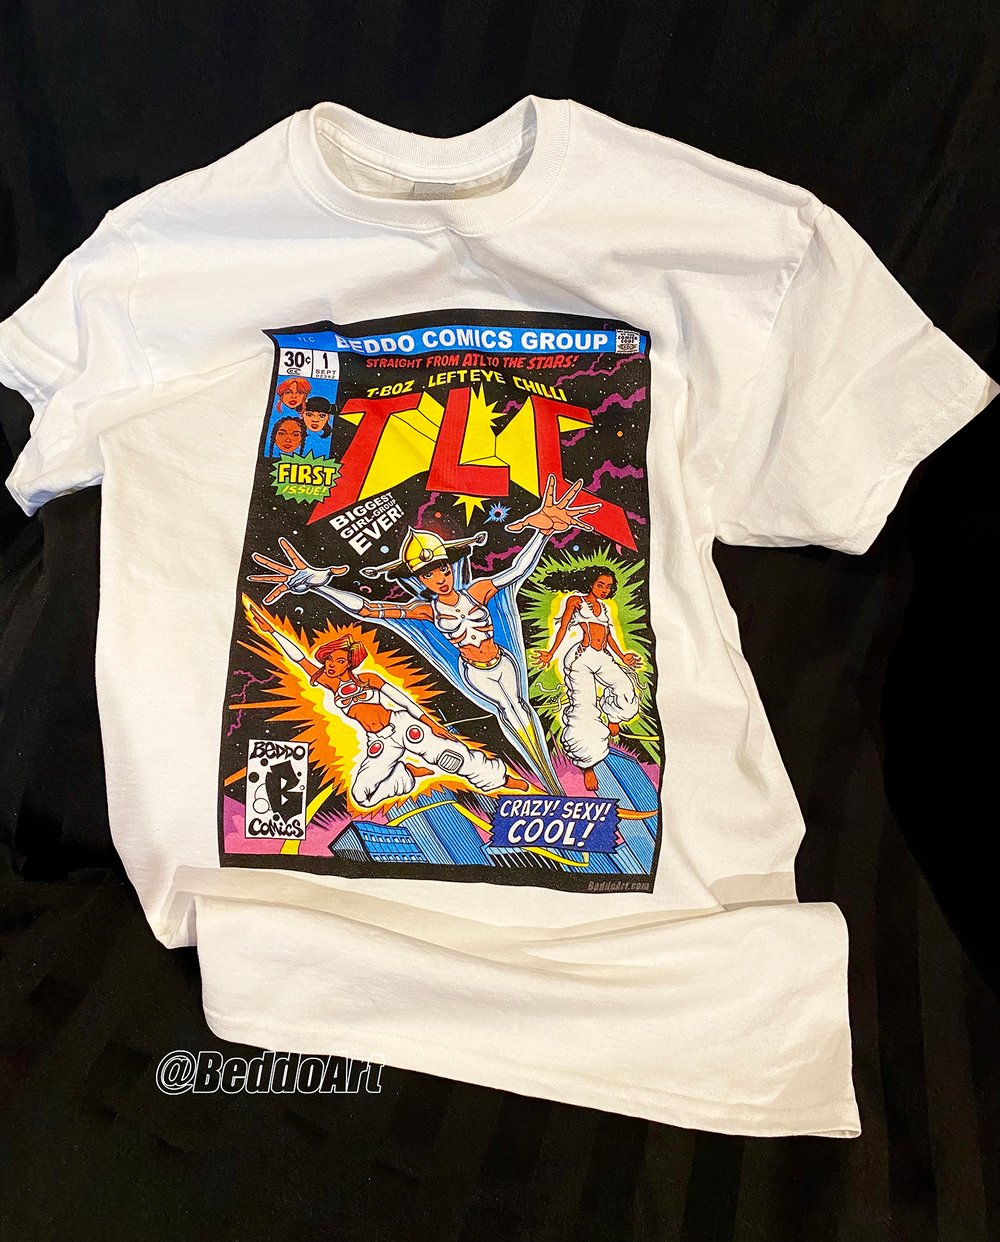 TLC #1 Comic Book Cover T-Shirt